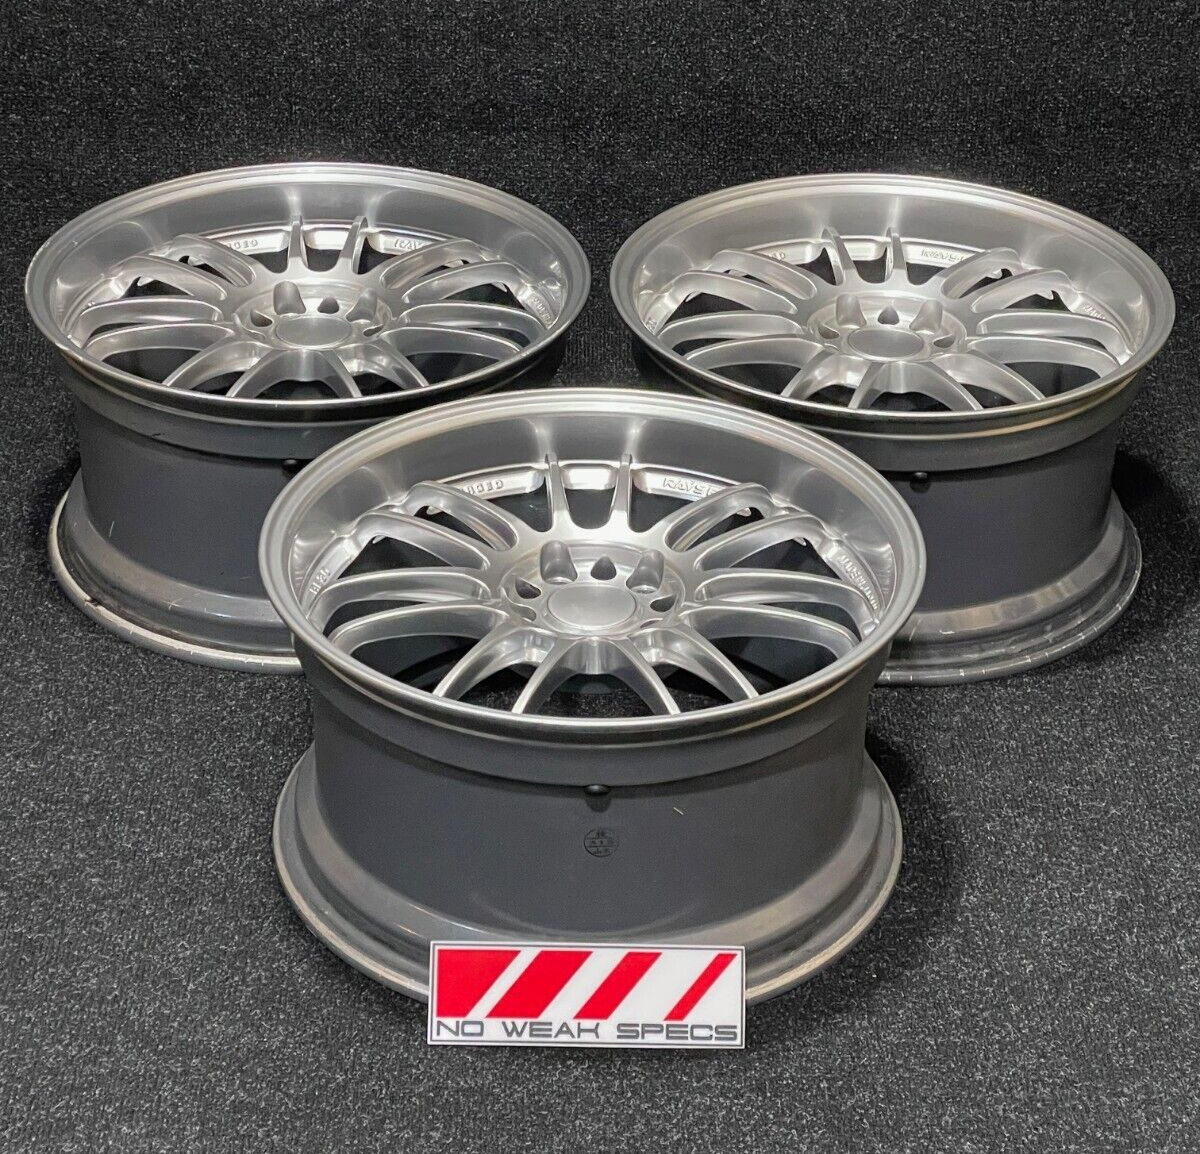 Rays Volk Racing RE30 Wheels Rims 5x114.3 18x9.5 +42 S2000 GTR NSX WRX Honda